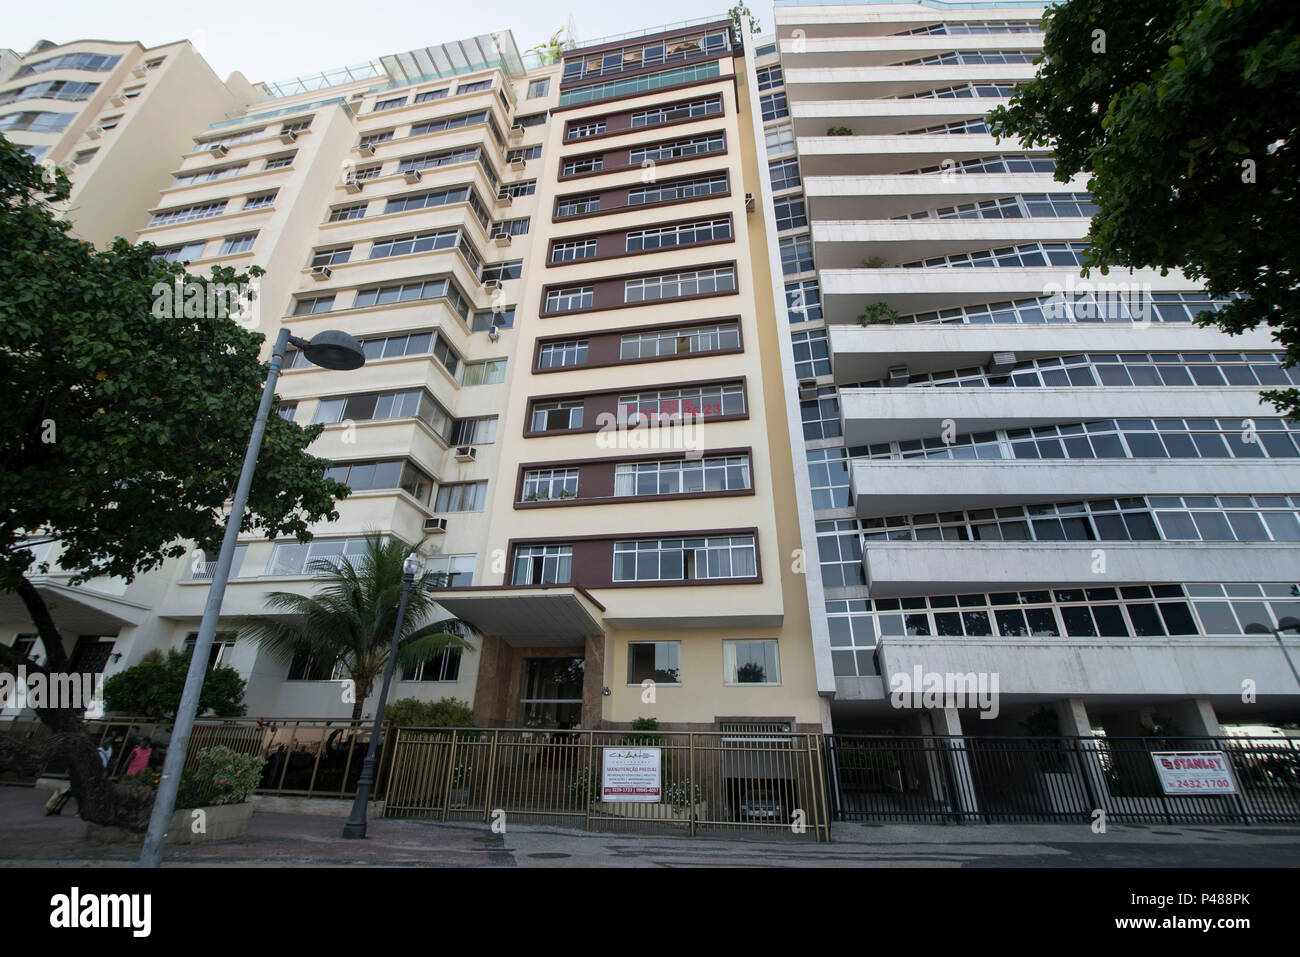 Rio de Janeiro/RJ, Brasil - 27/02/2015. APARTAMENTO A VENDA - Apartamentos un venda na orla de Copacabana. Foto: Celso Pupo / Fotoarena Foto Stock